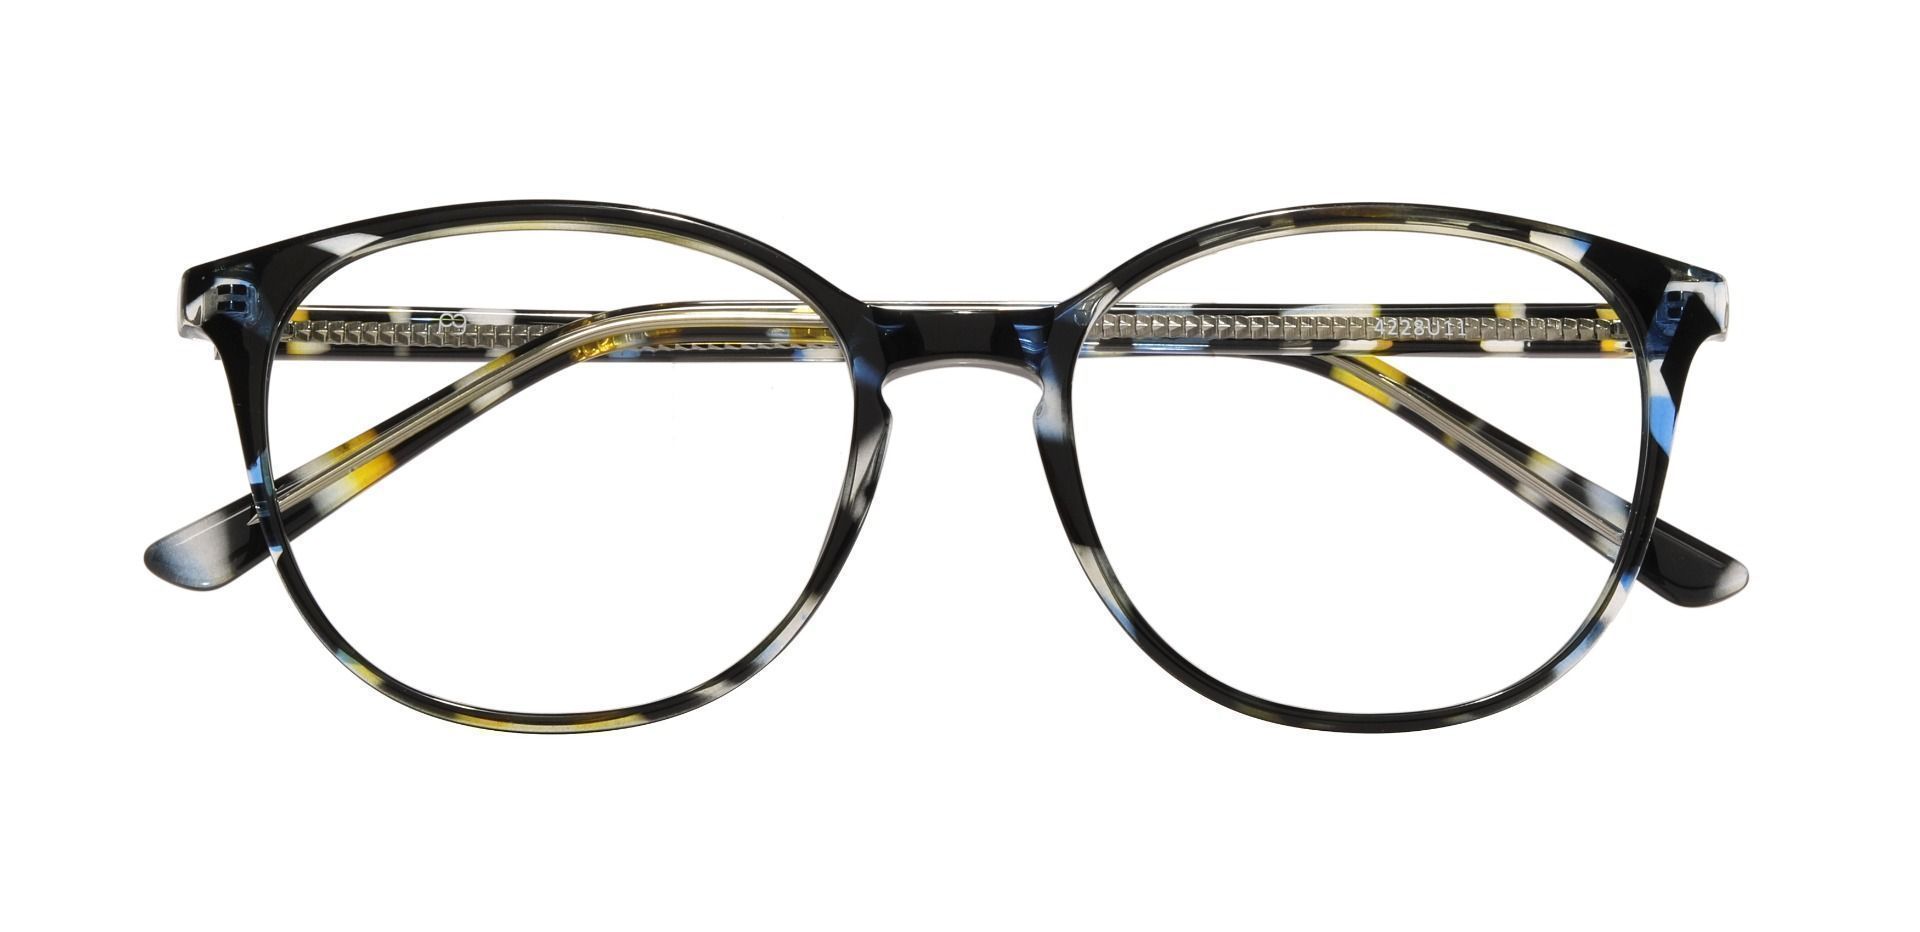 Shanley Oval Progressive Glasses - Two